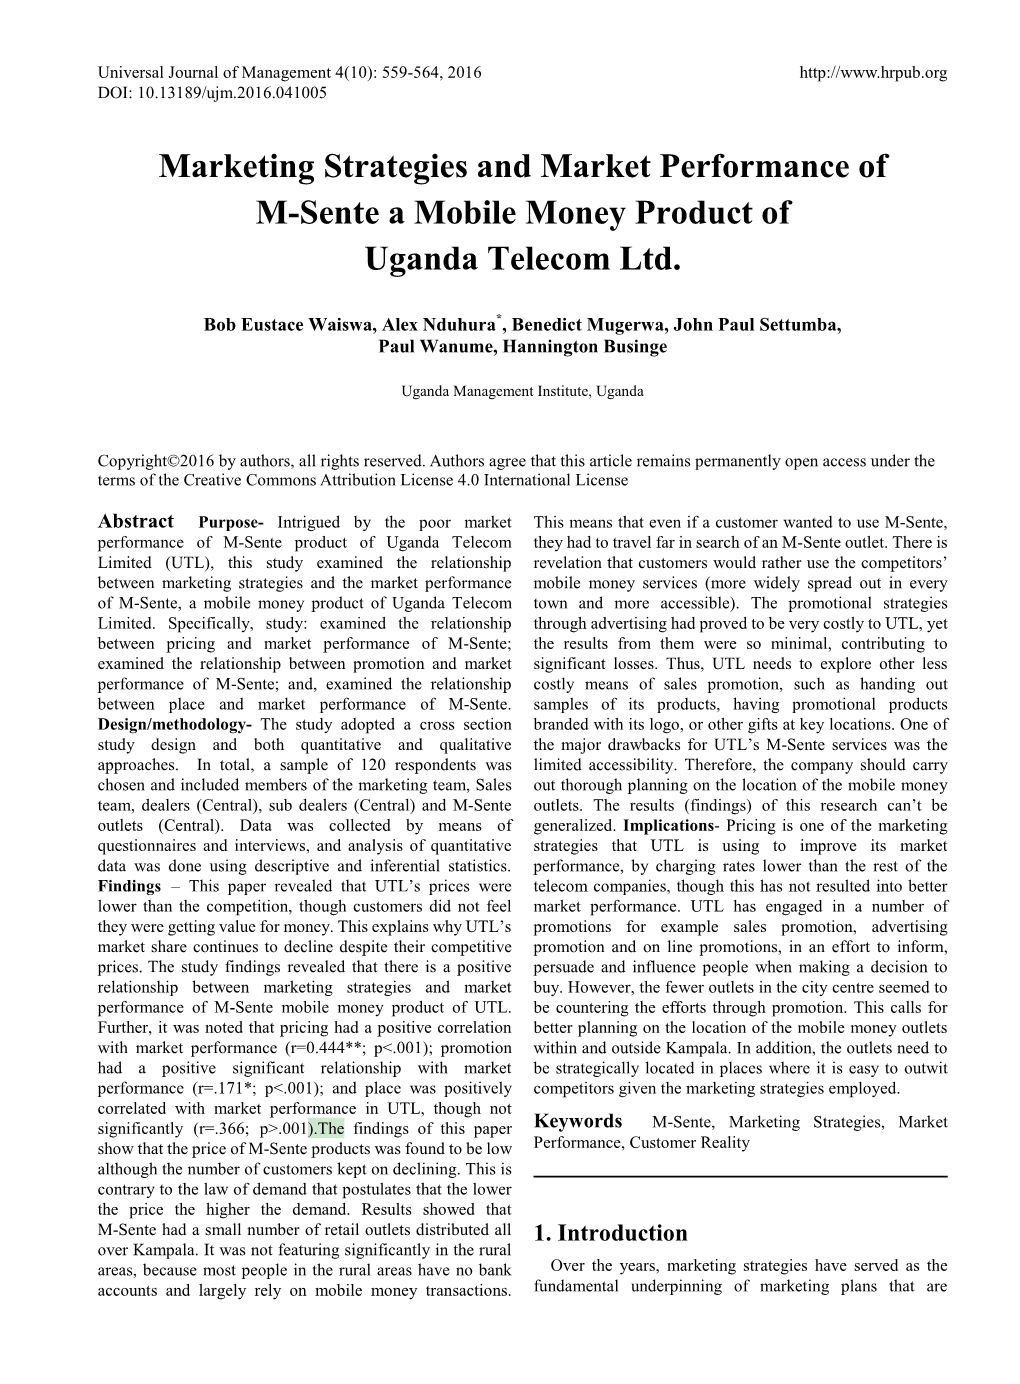 Marketing Strategies and Market Performance of M-Sente a Mobile Money Product of Uganda Telecom Ltd